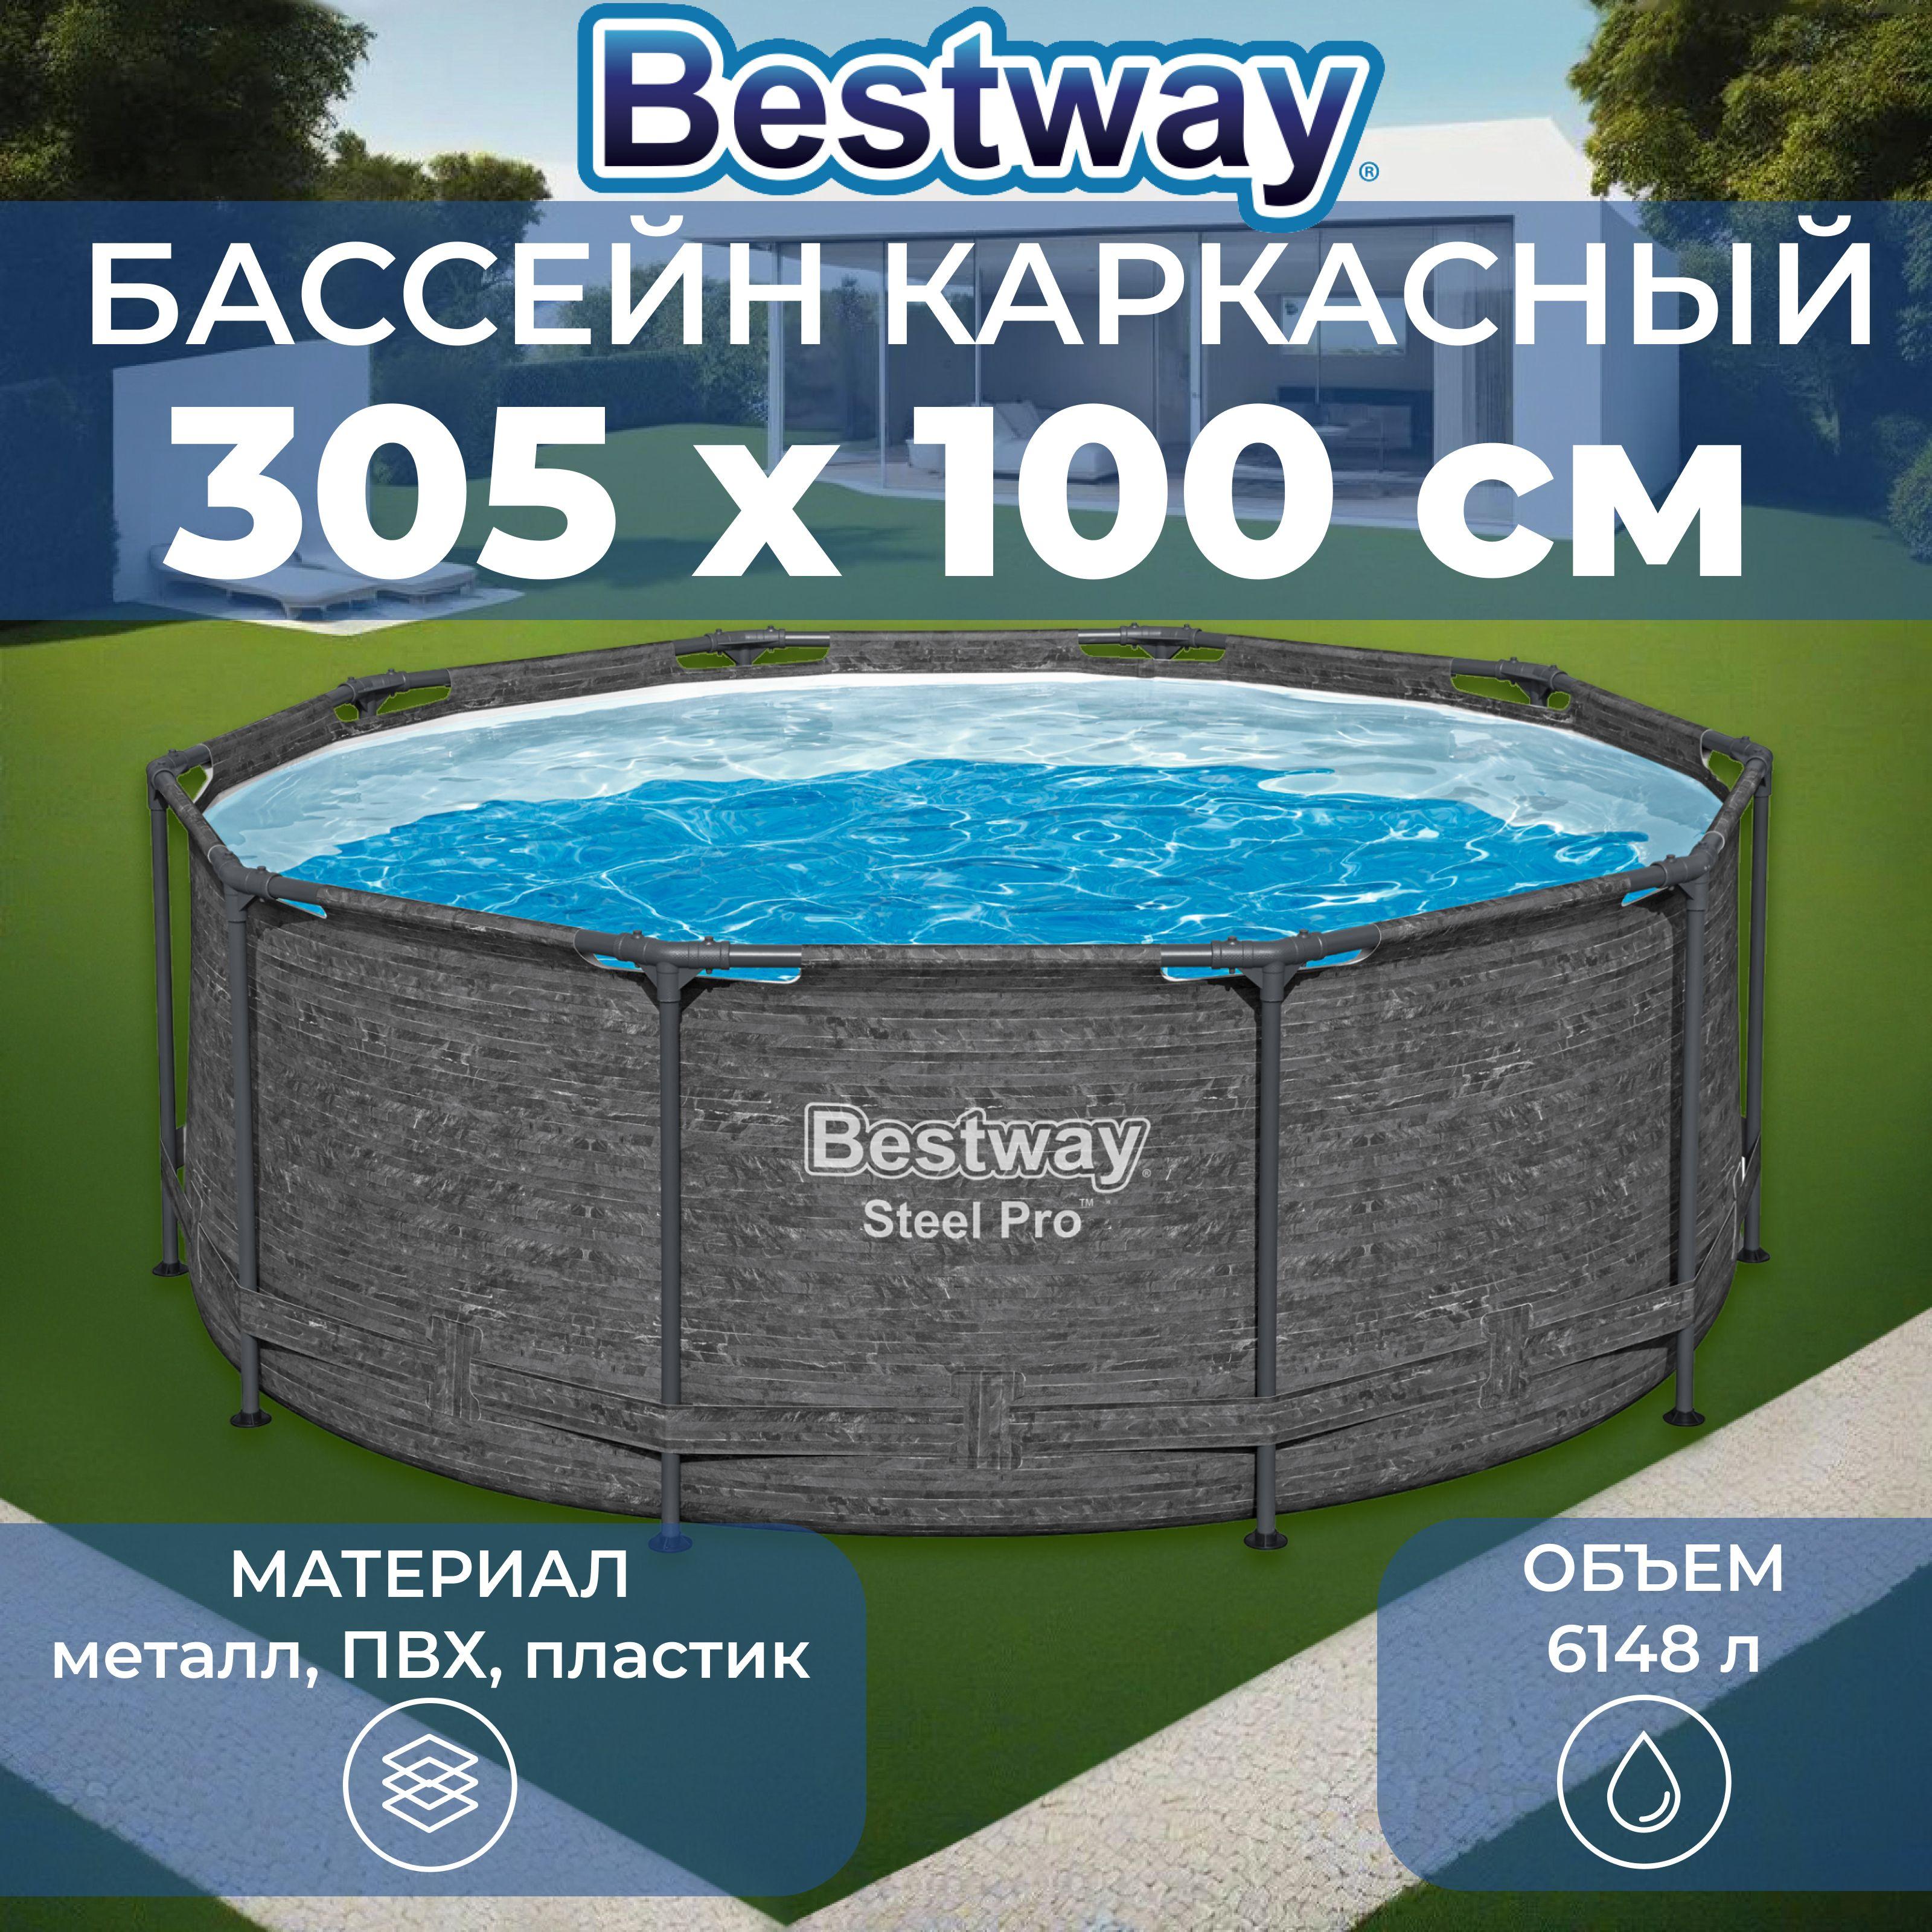 Bestway | Бассейн каркасный Steel Pro 305 х 100 см, цвет графит